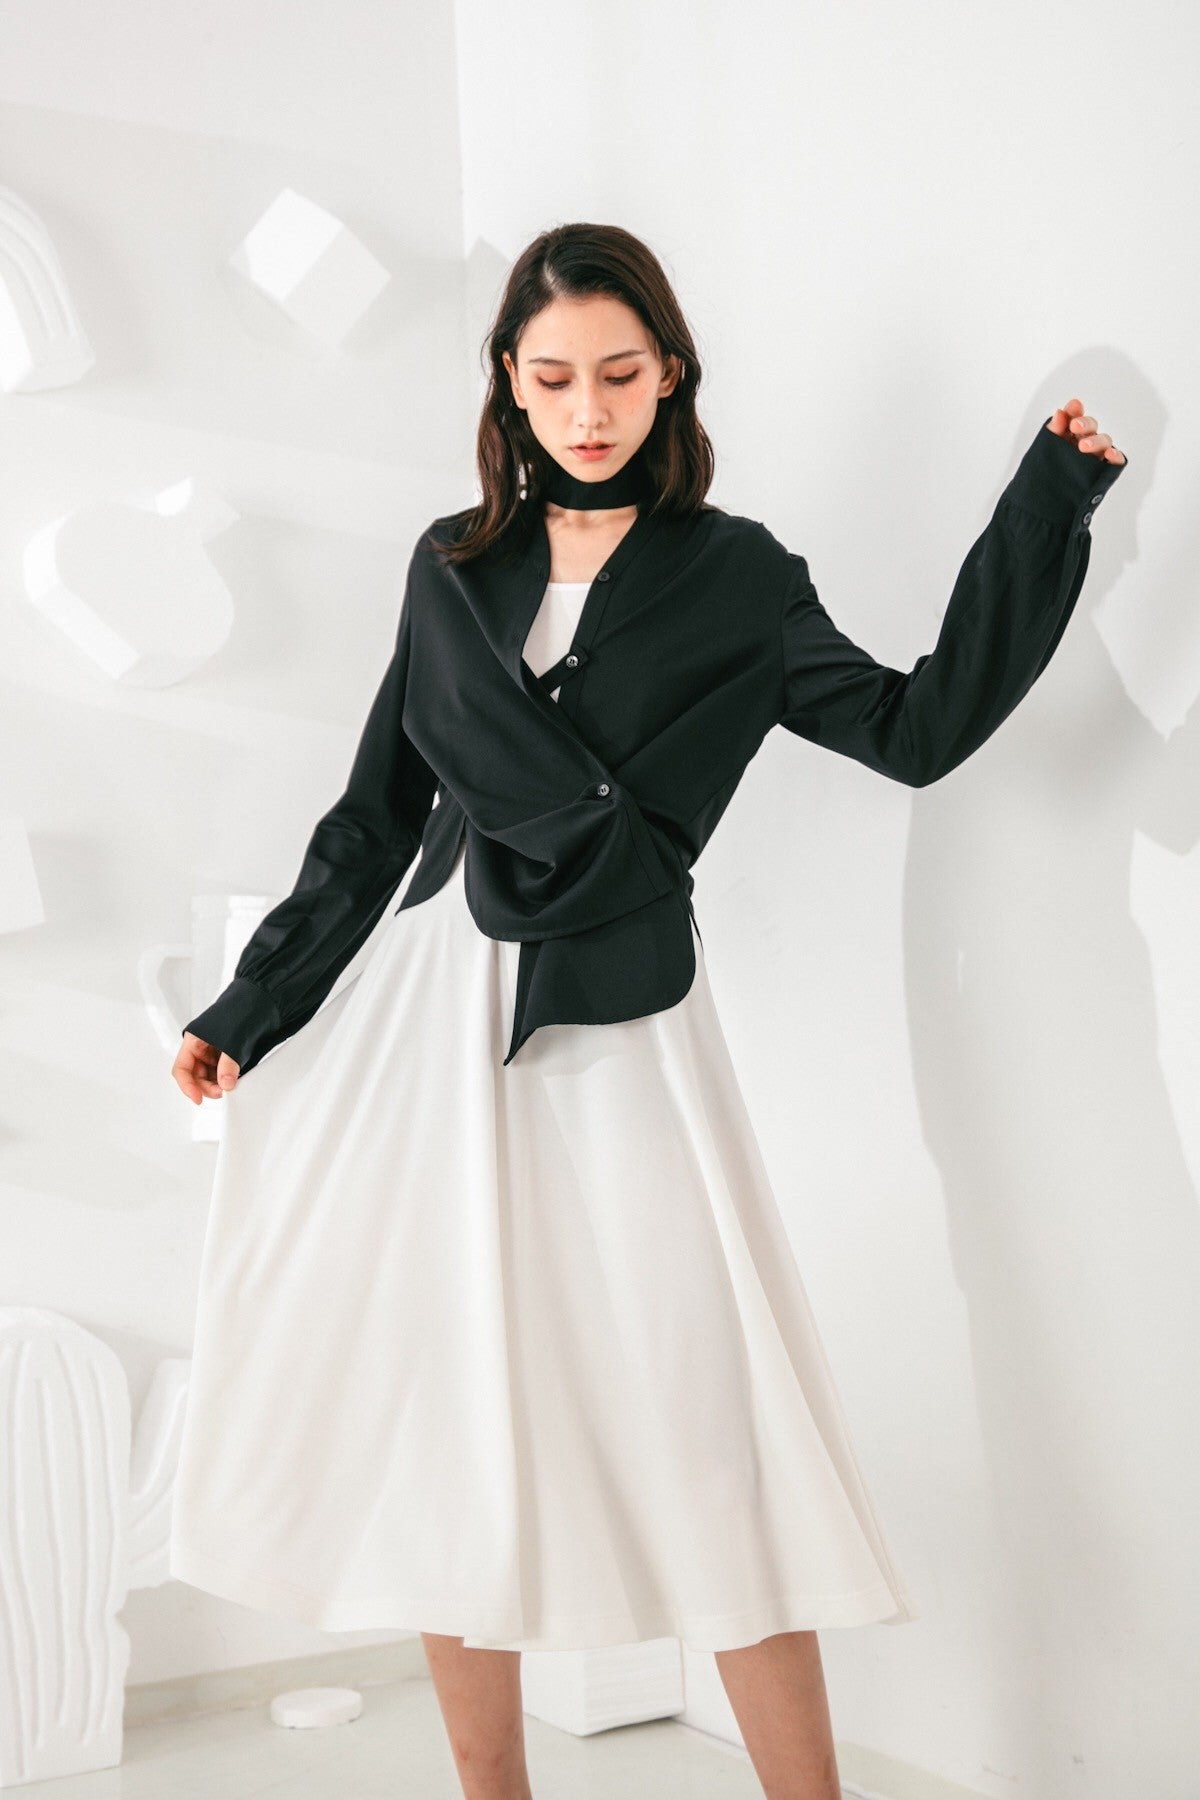 SKYE San Francisco SF shop ethical modern minimalist quality women clothing fashion Eléonore Blouse black 2